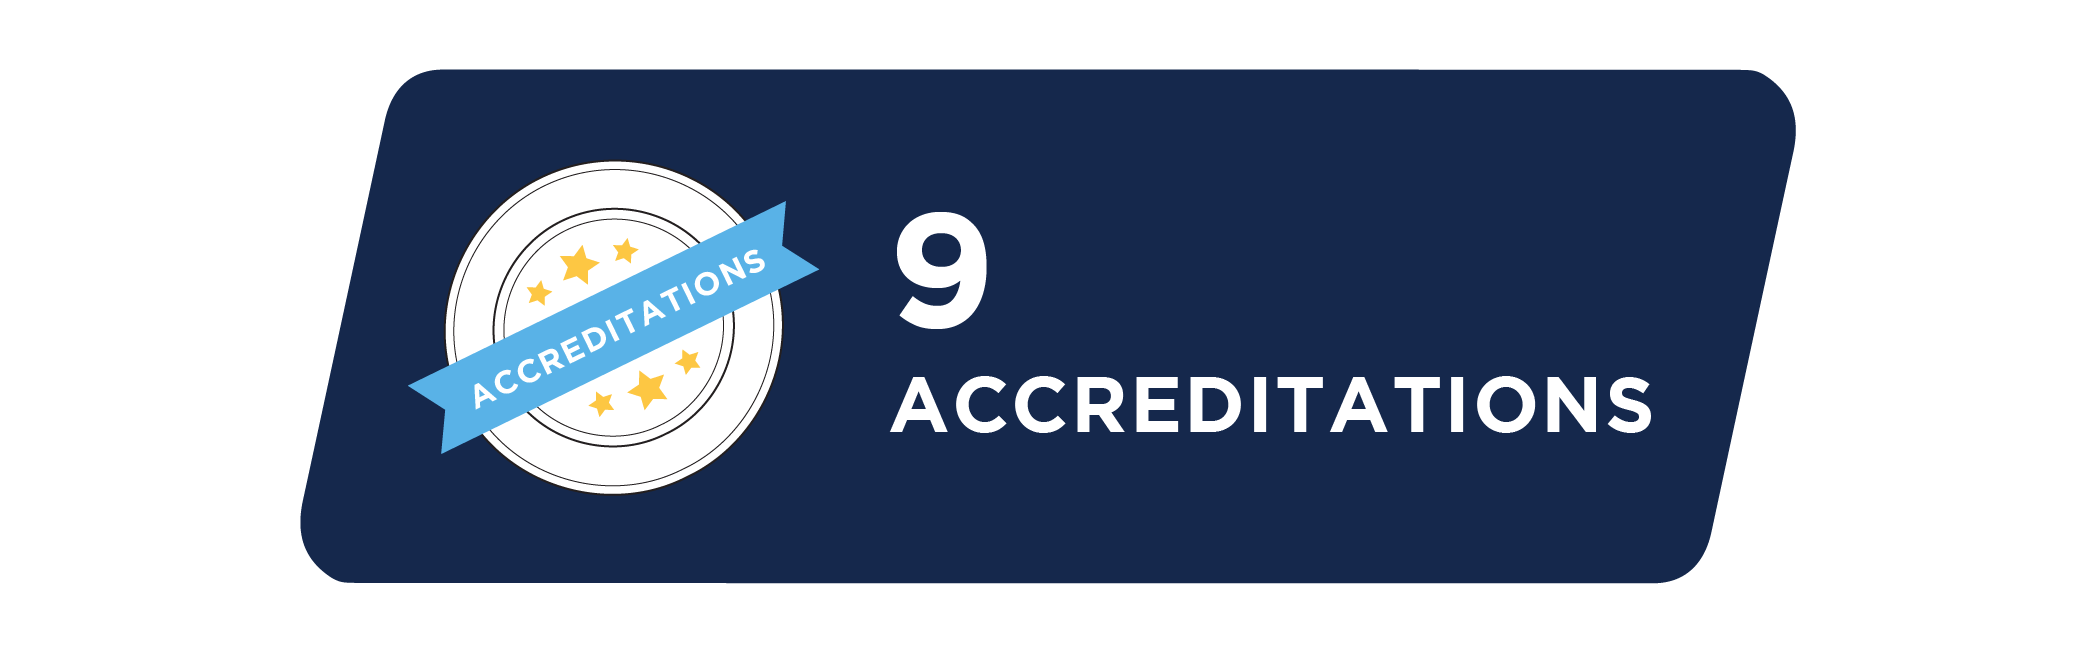 8 accreditations